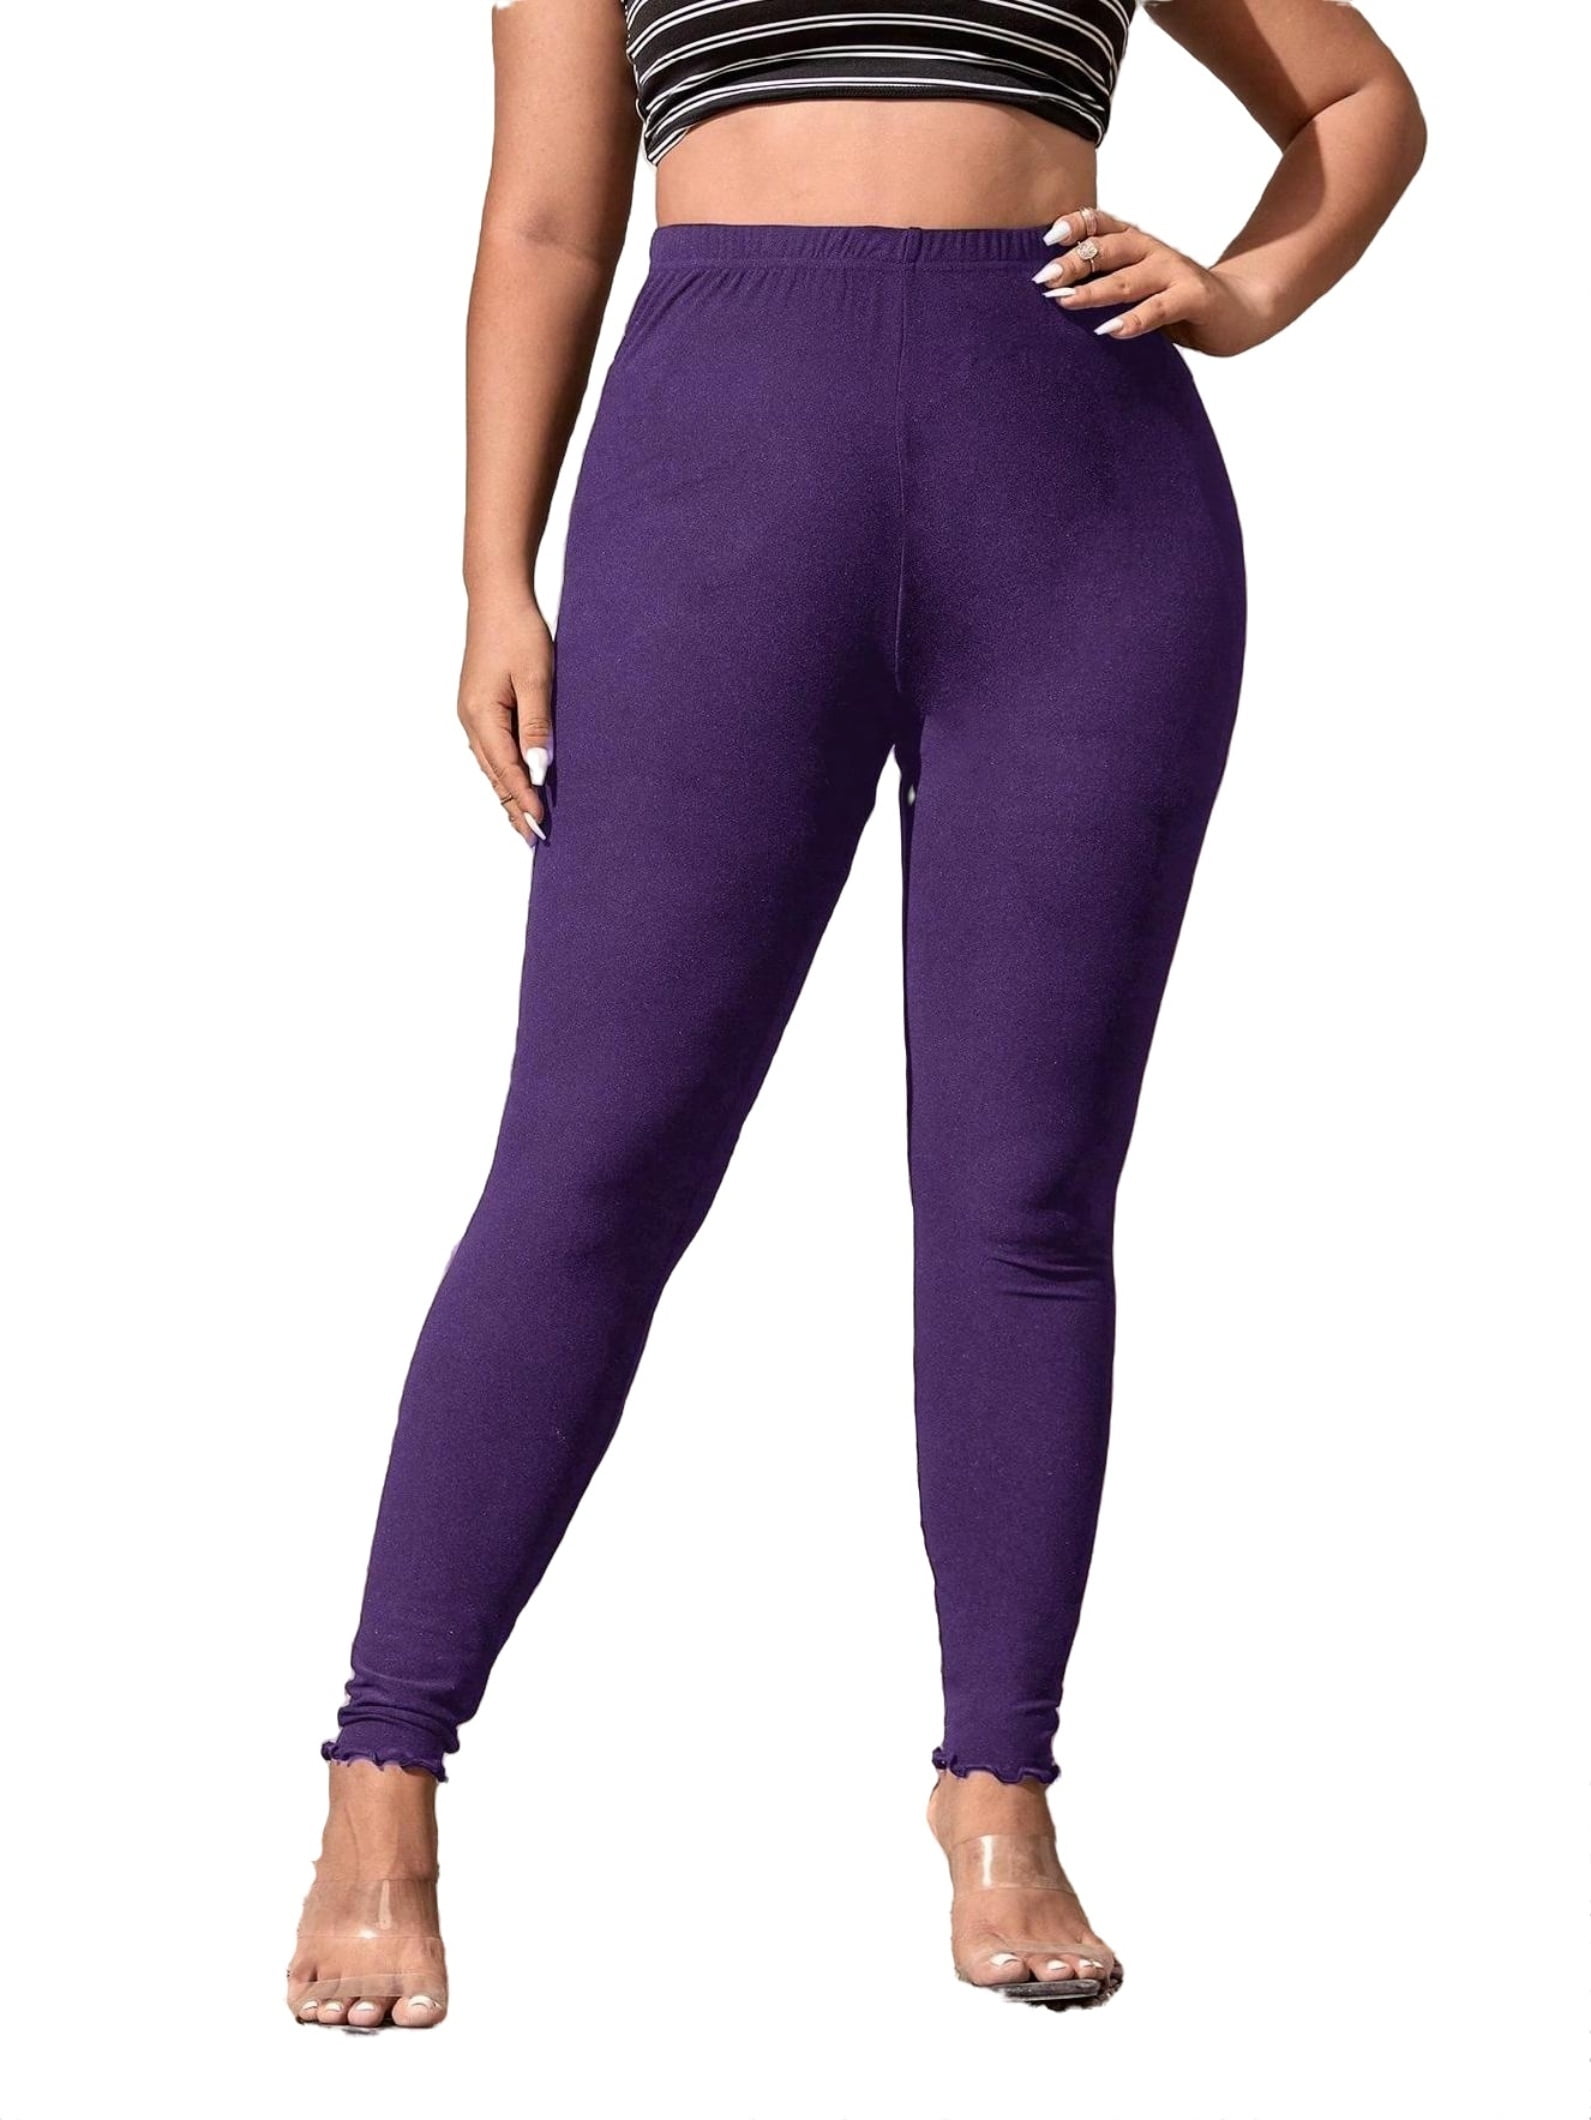 Lularoe Multi Color Purple Leggings Size 1X (Tall & Curvy) (Plus) - 55% off